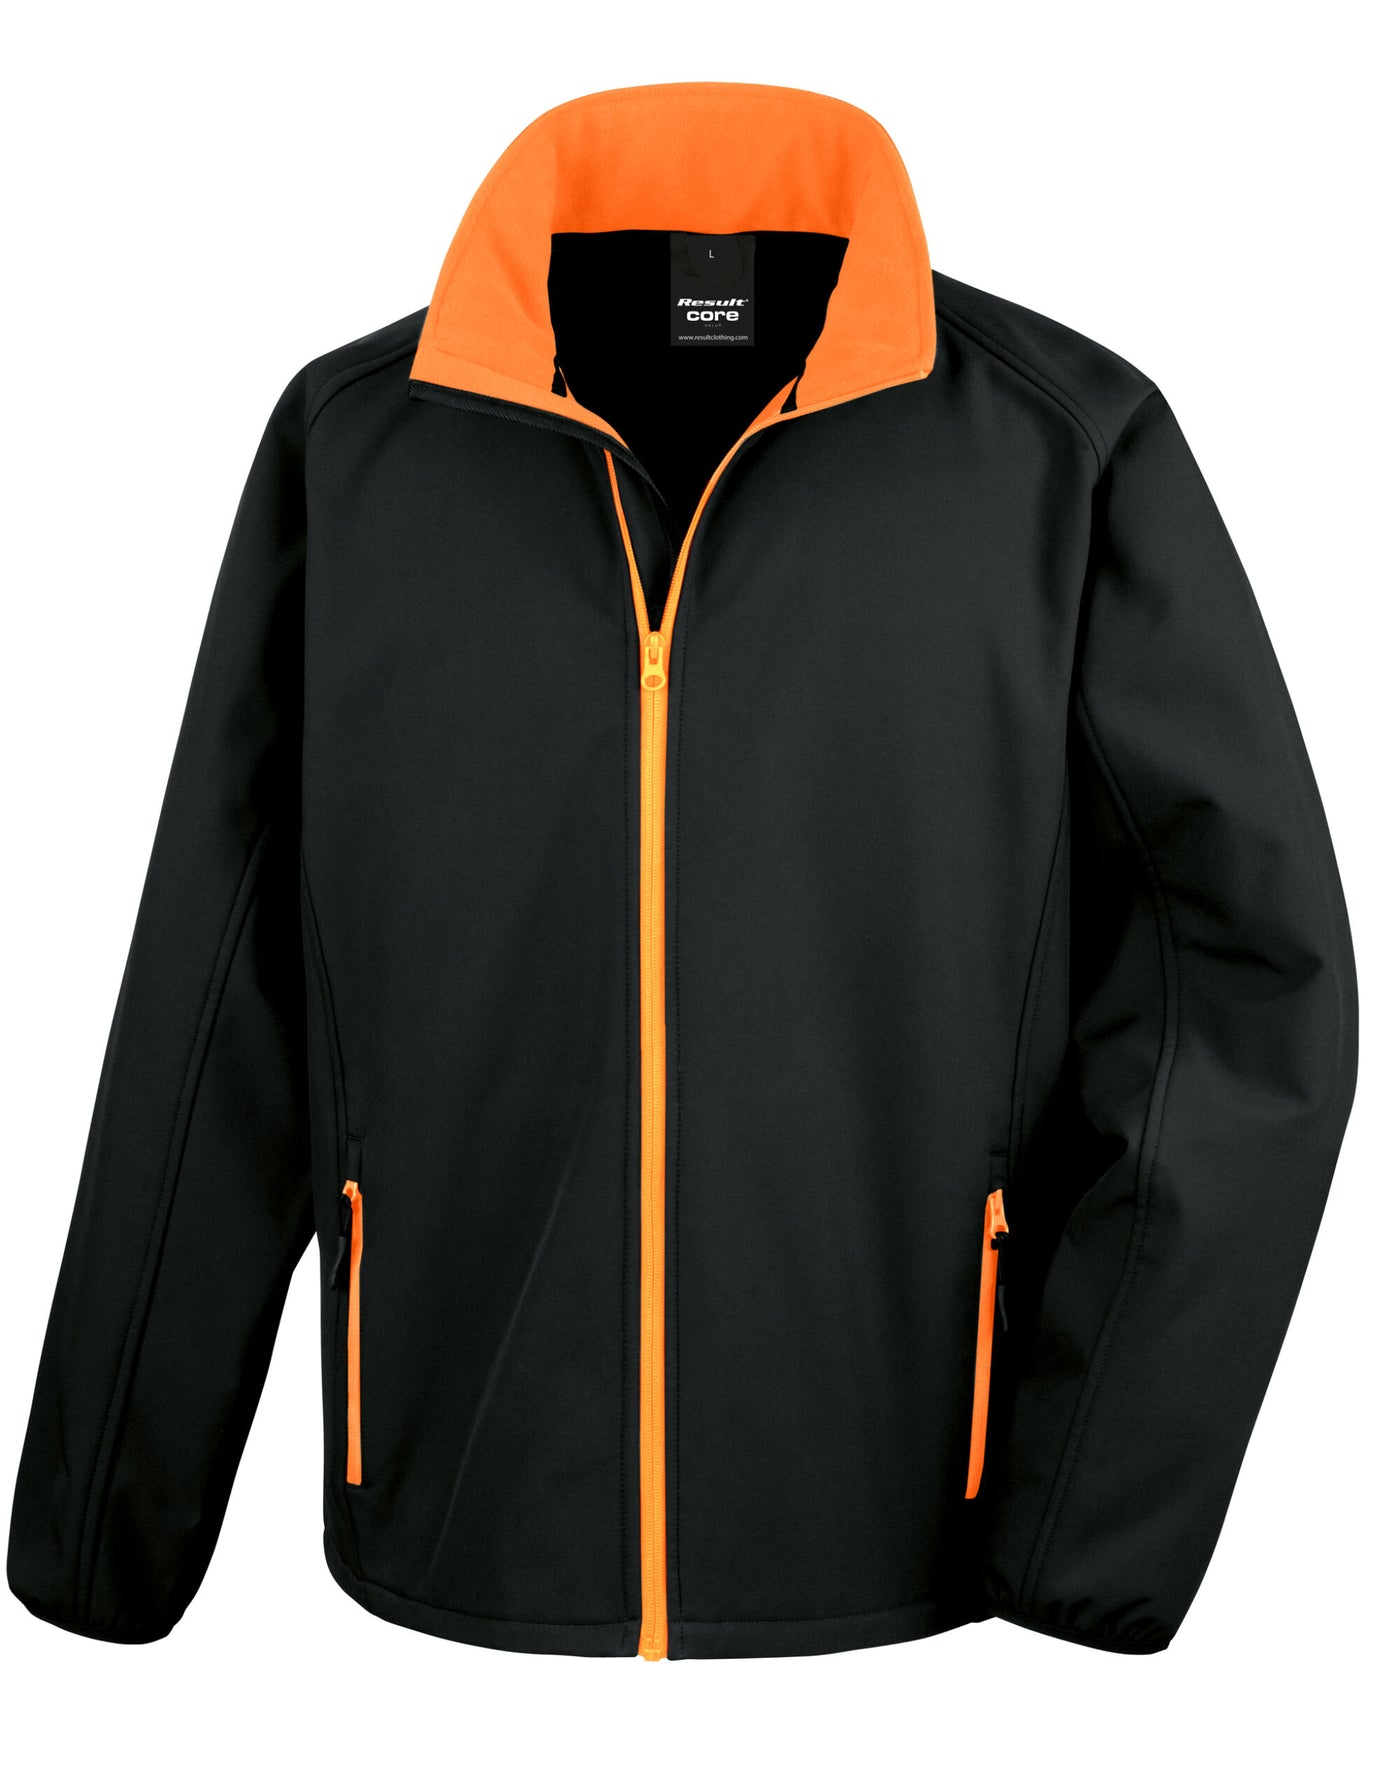 Men's Printable Soft Shell Jacket in Black Orange